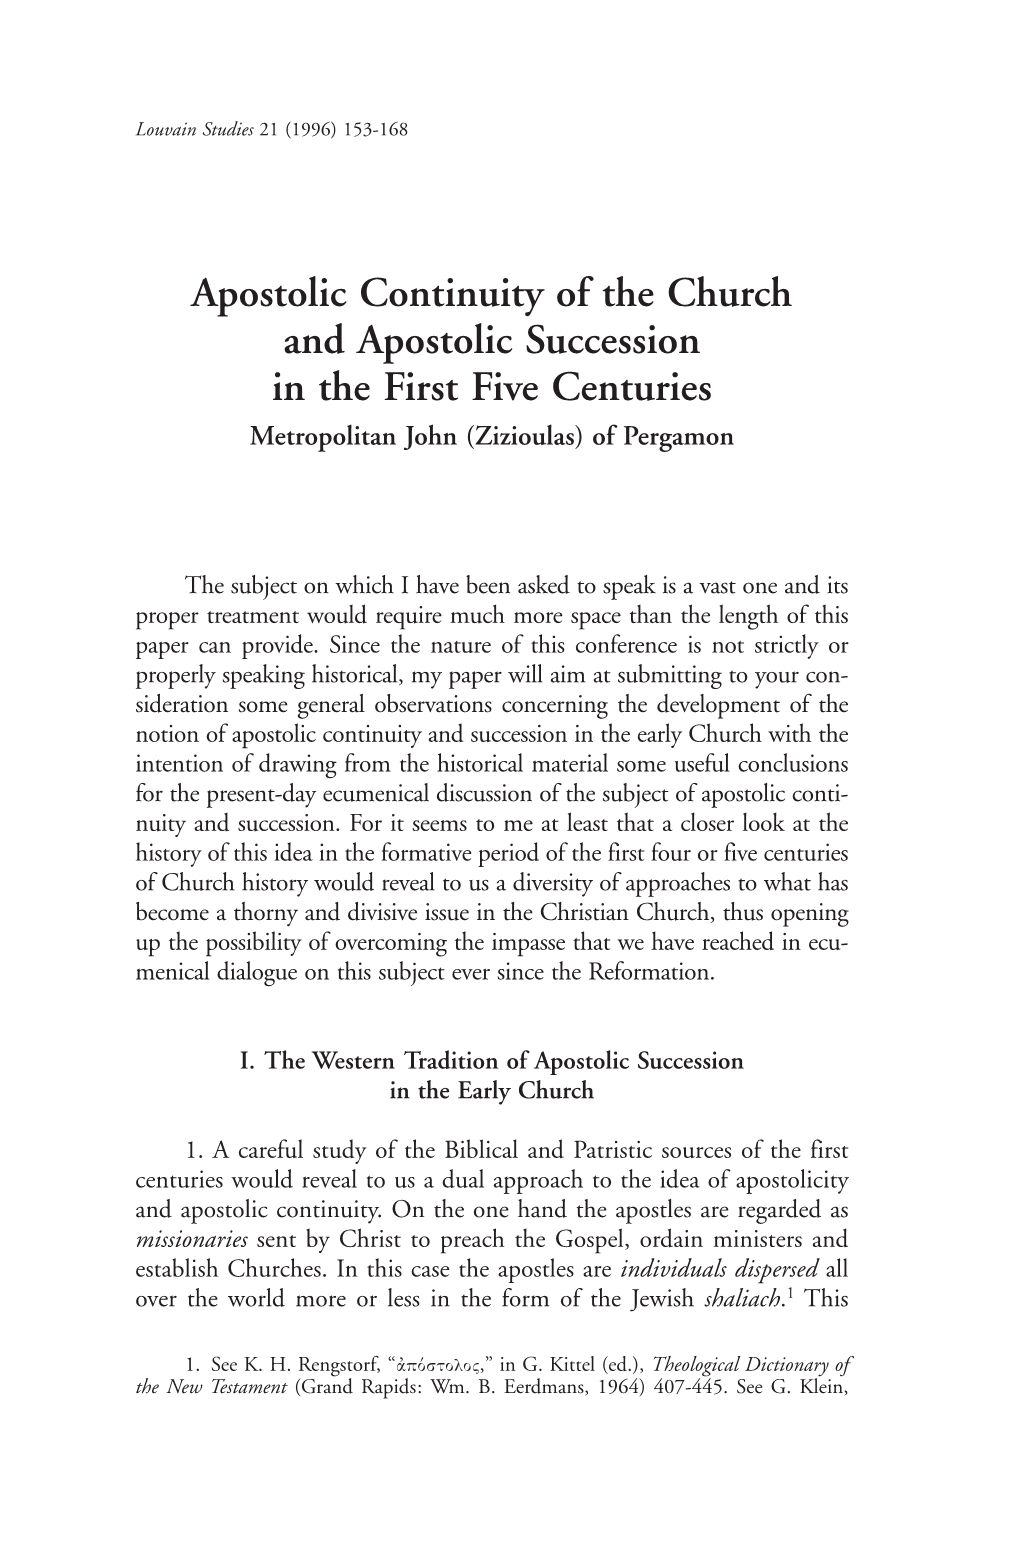 Apostolic Continuity of the Church and Apostolic Succession in the First Five Centuries Metropolitan John (Zizioulas) of Pergamon